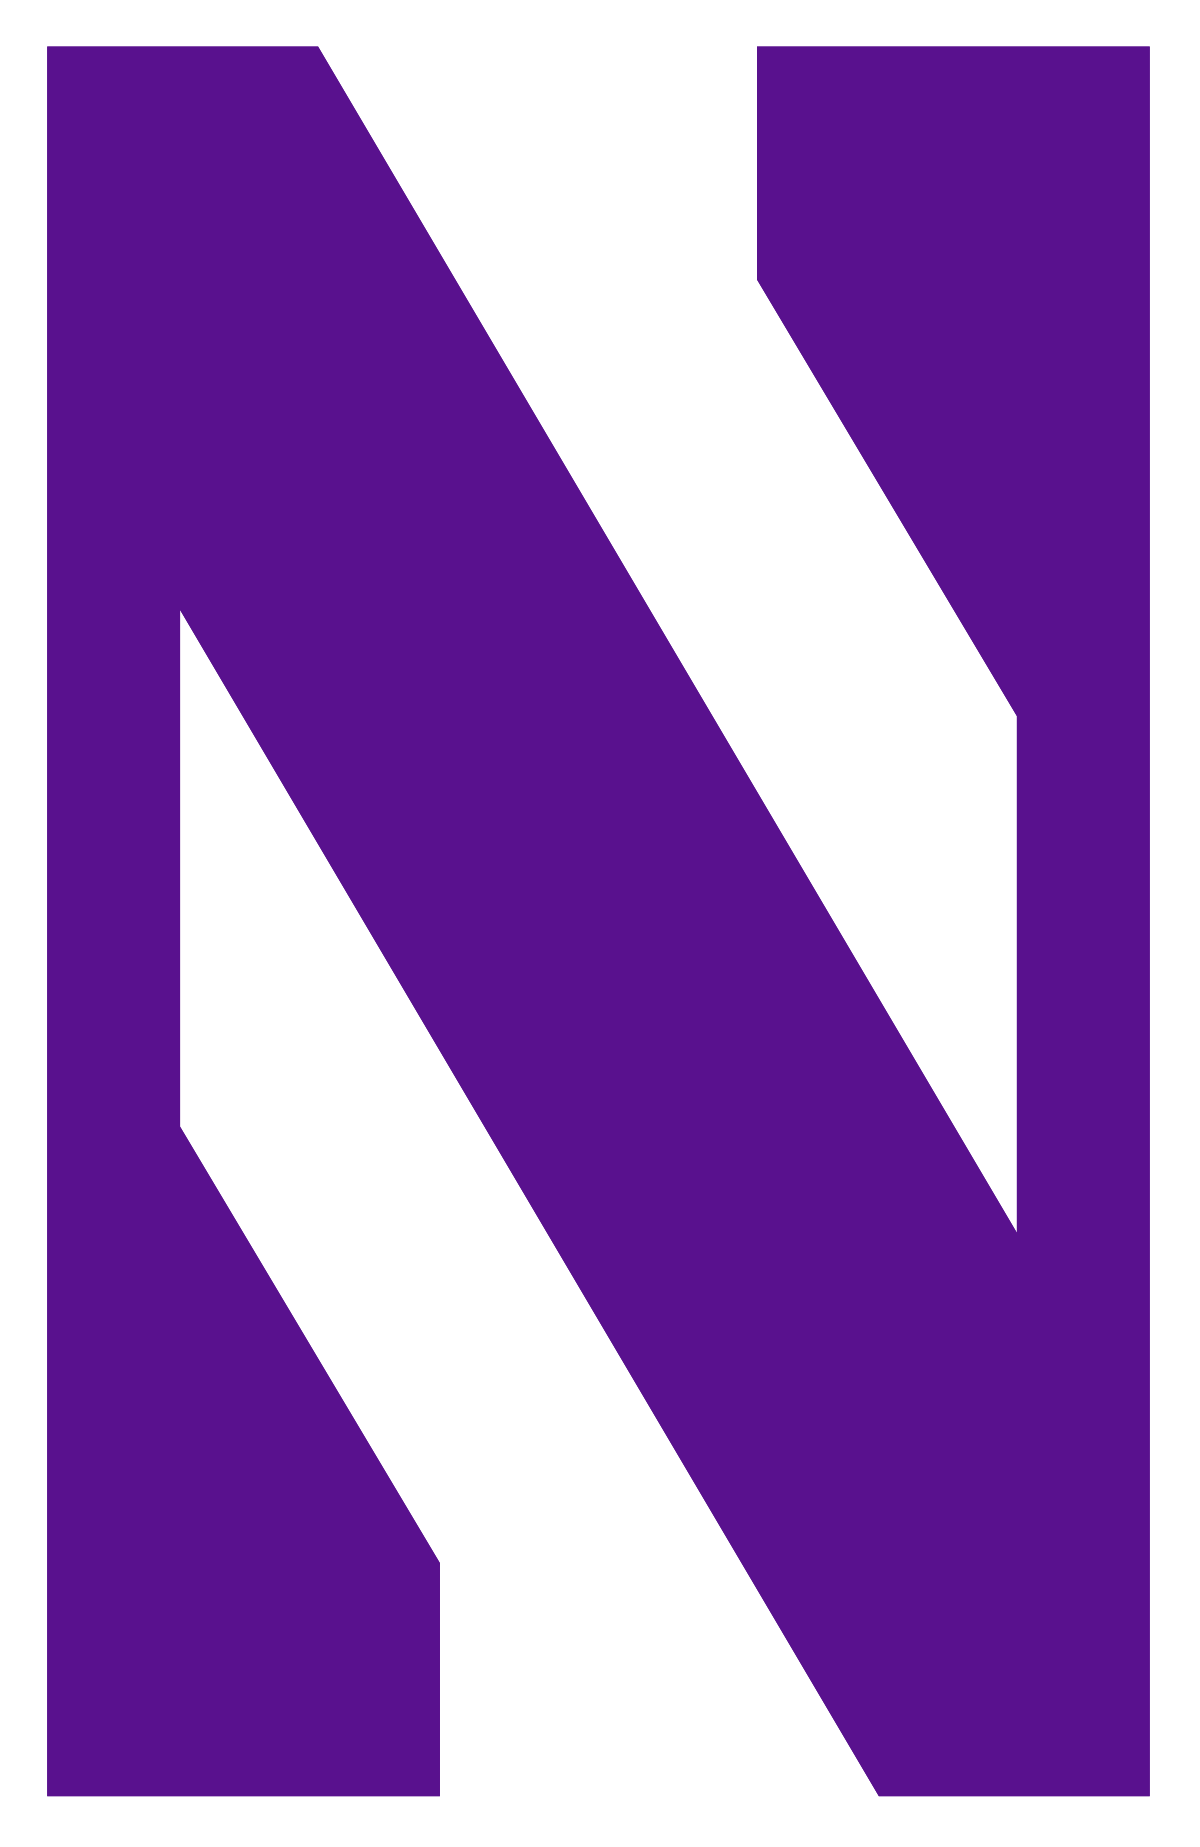 Northwestern Wildcats logo